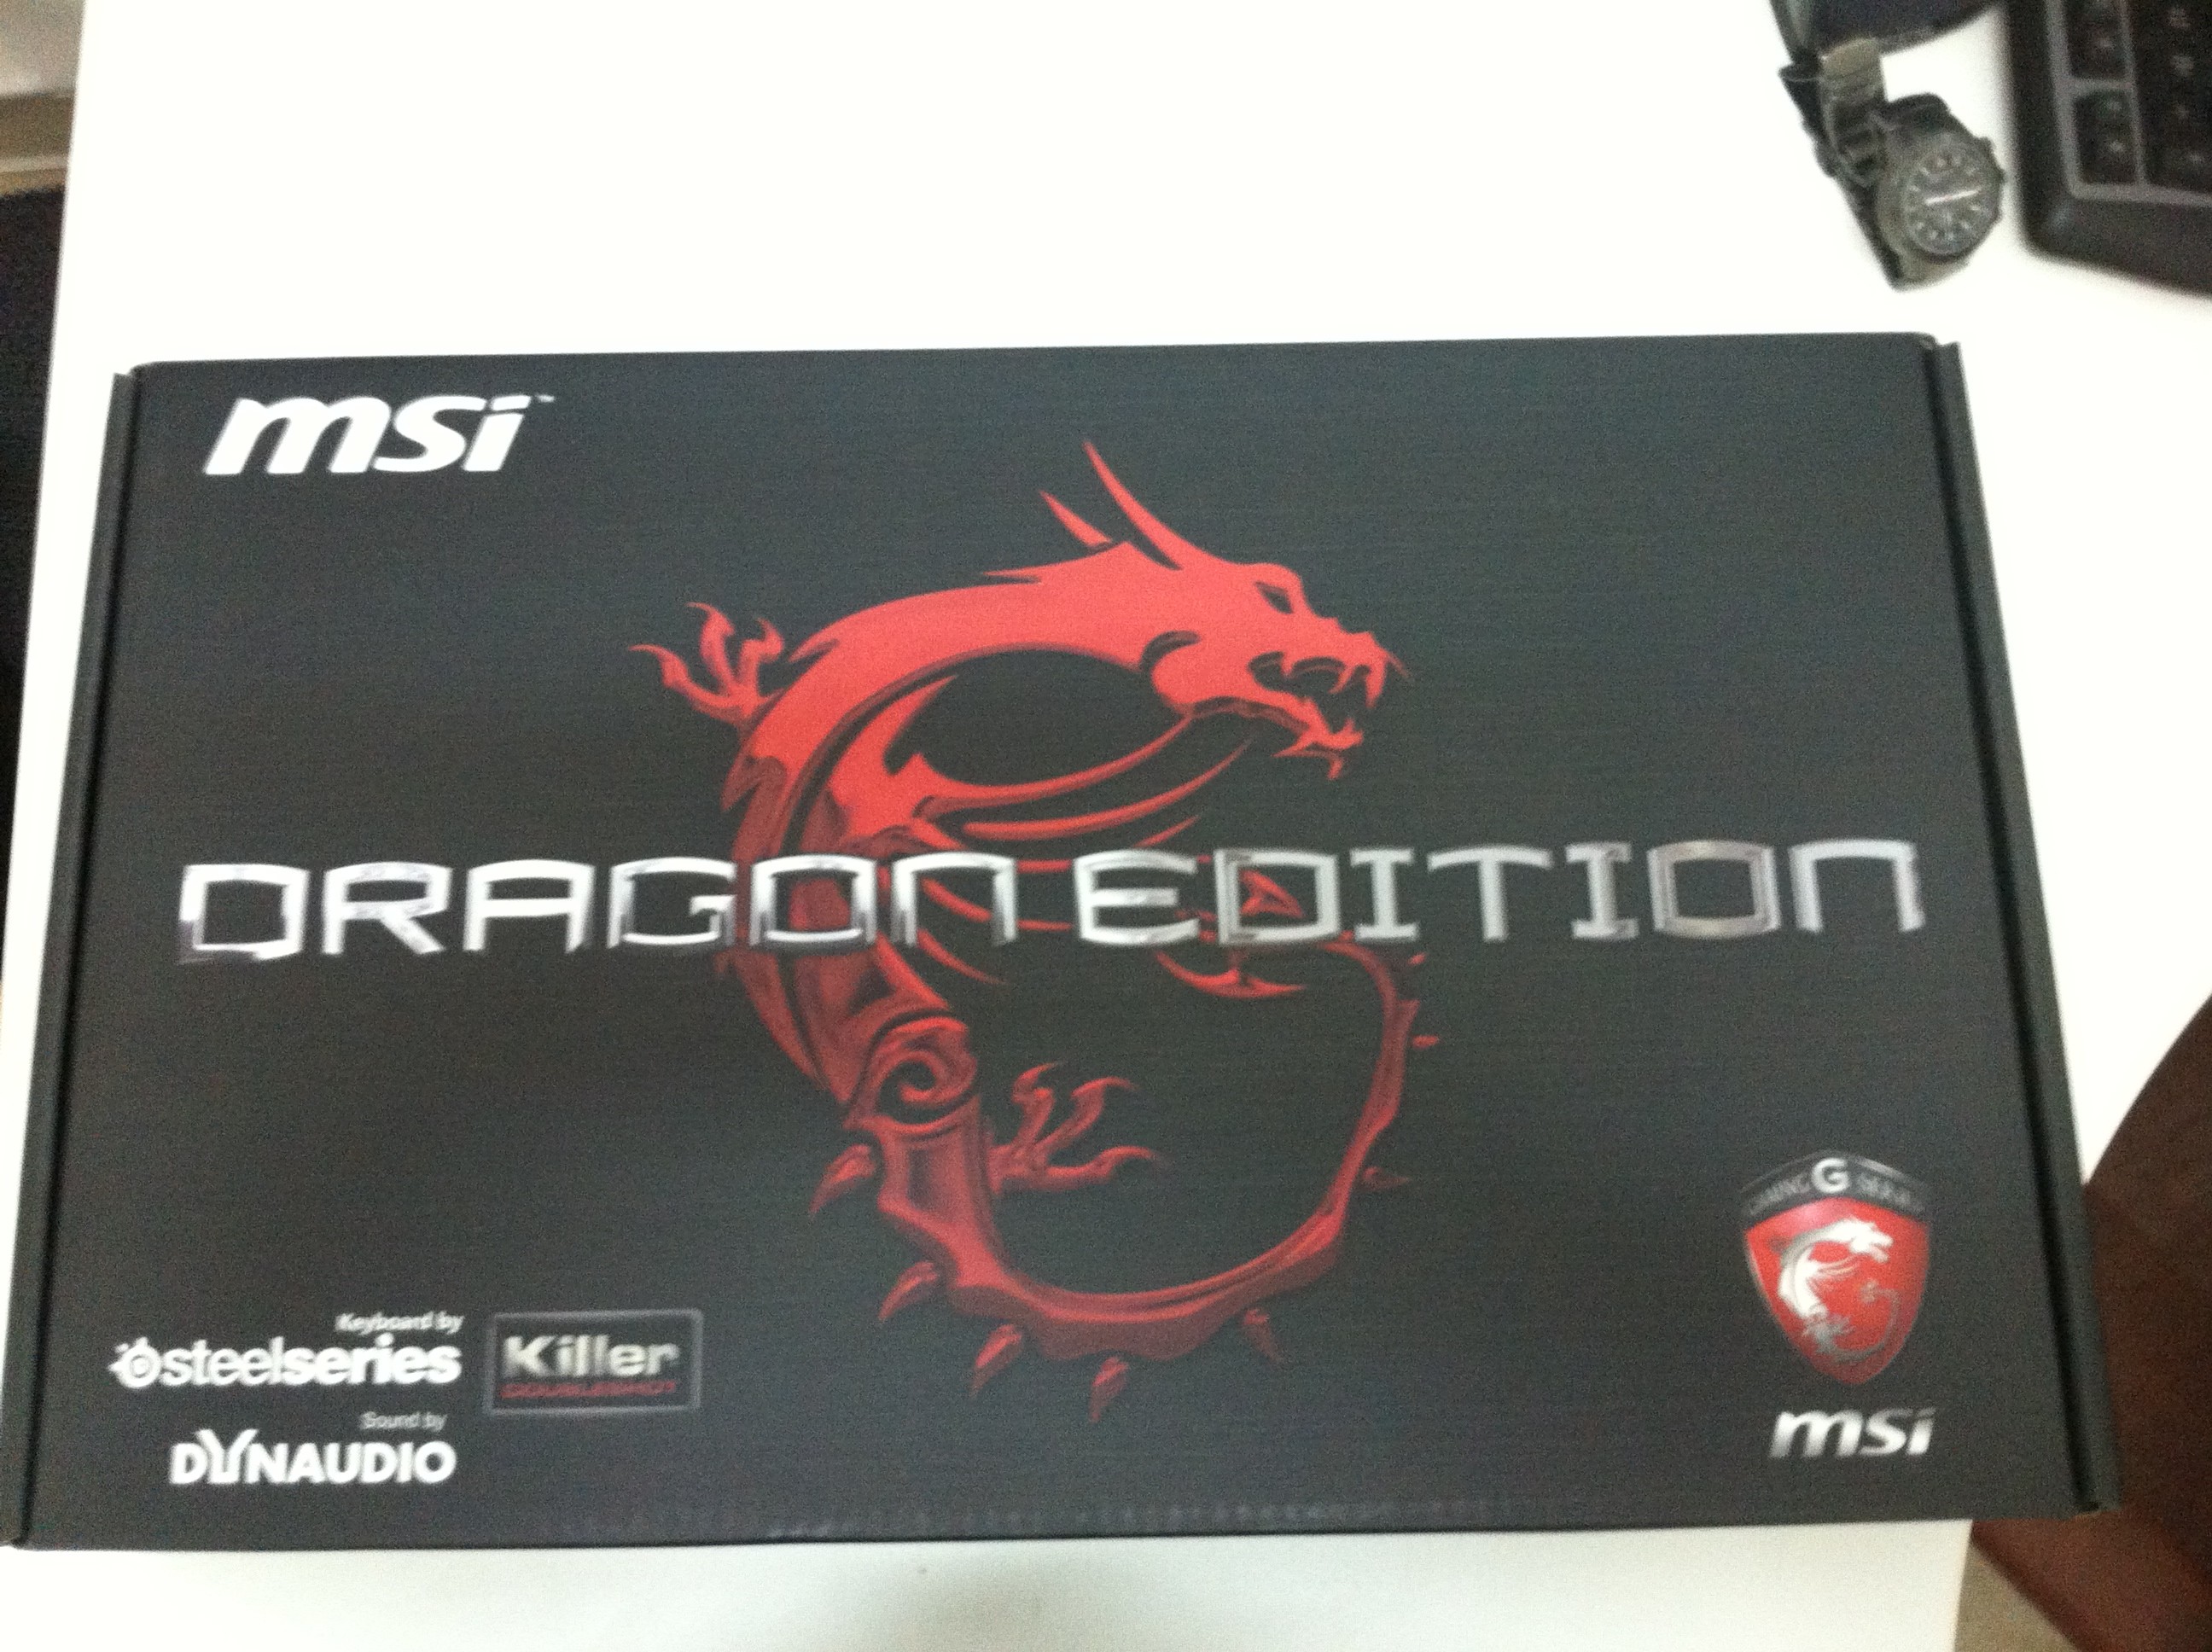  MSI GT70 Dragon Edition SuperR2 205TR ALINDI.. RESİMLER VE İNCELEME İLK MESAJDA